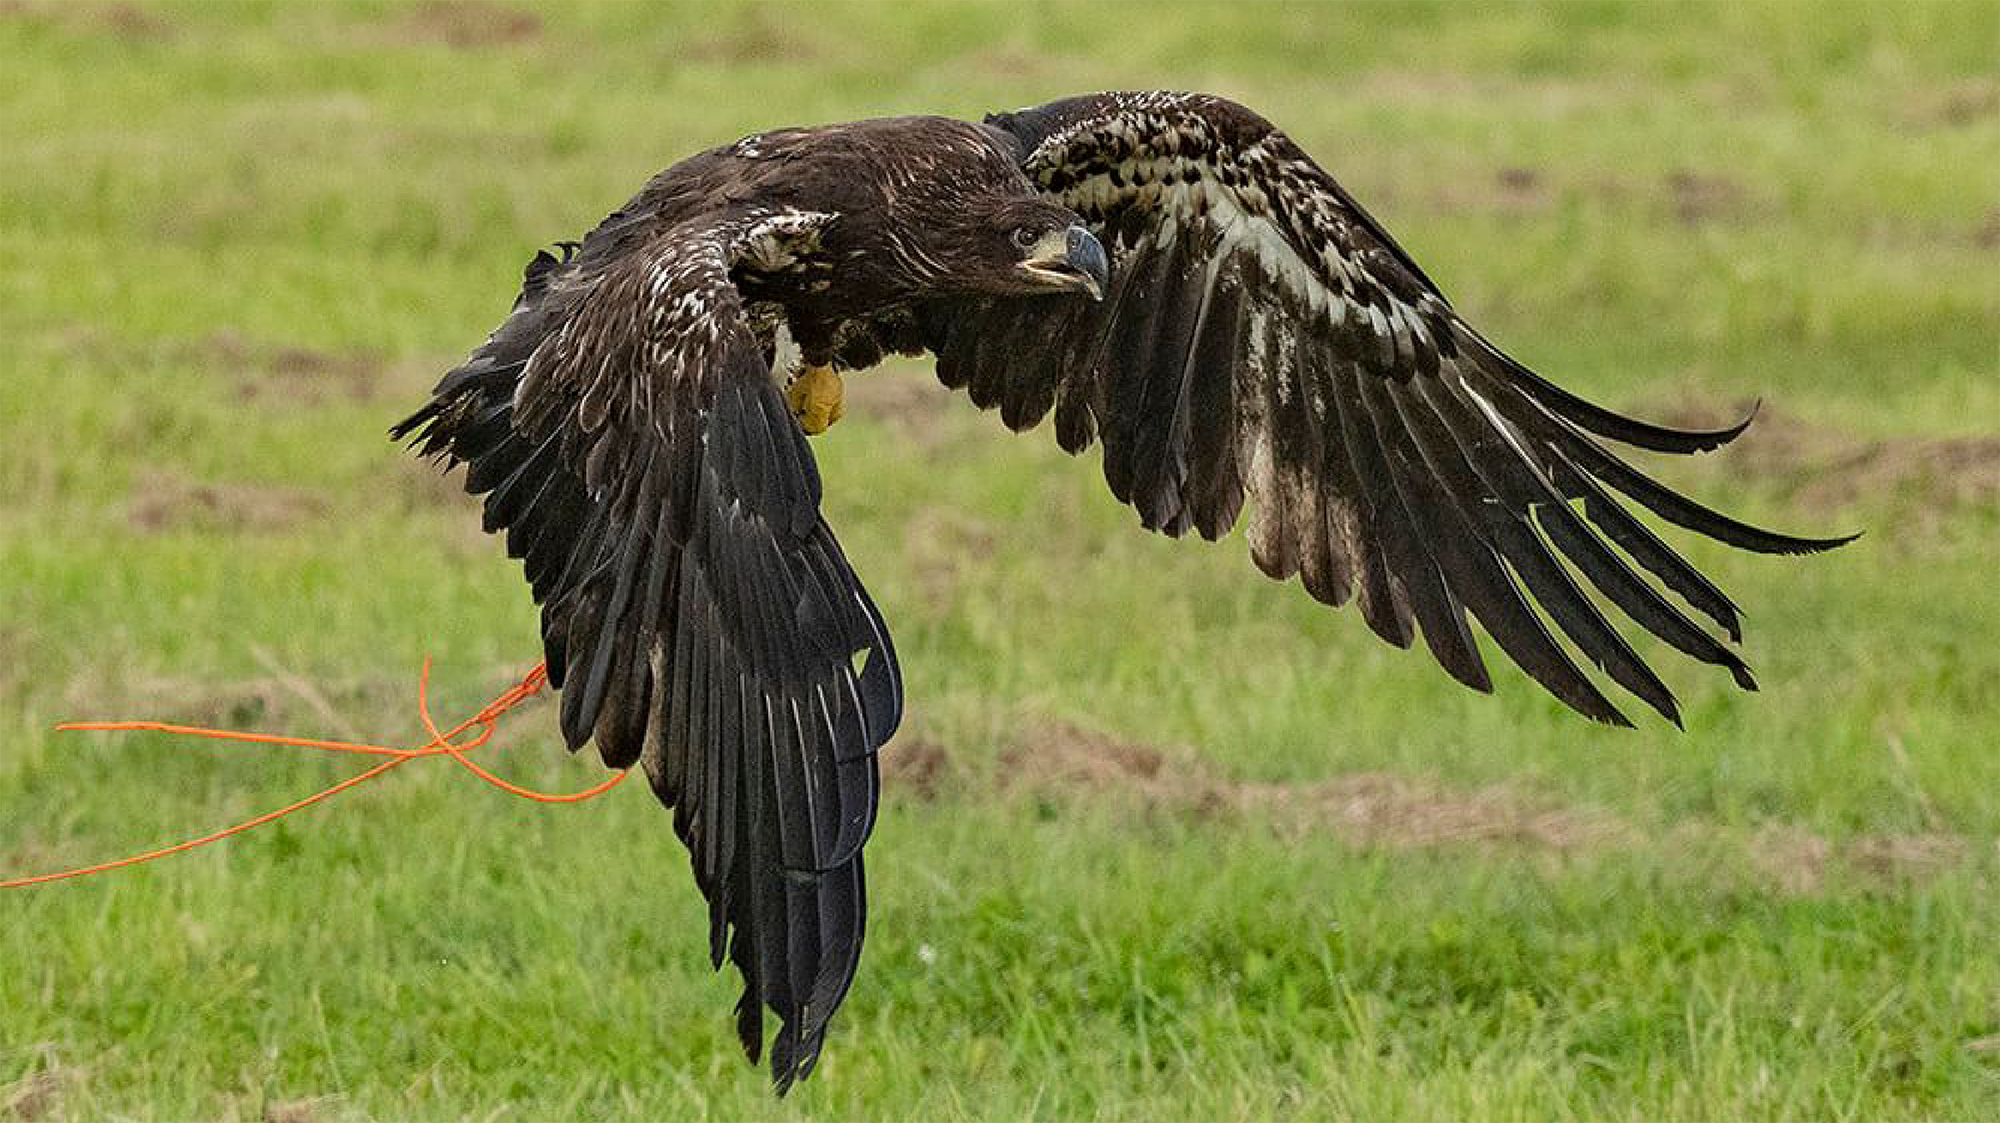 Eagle takes flight